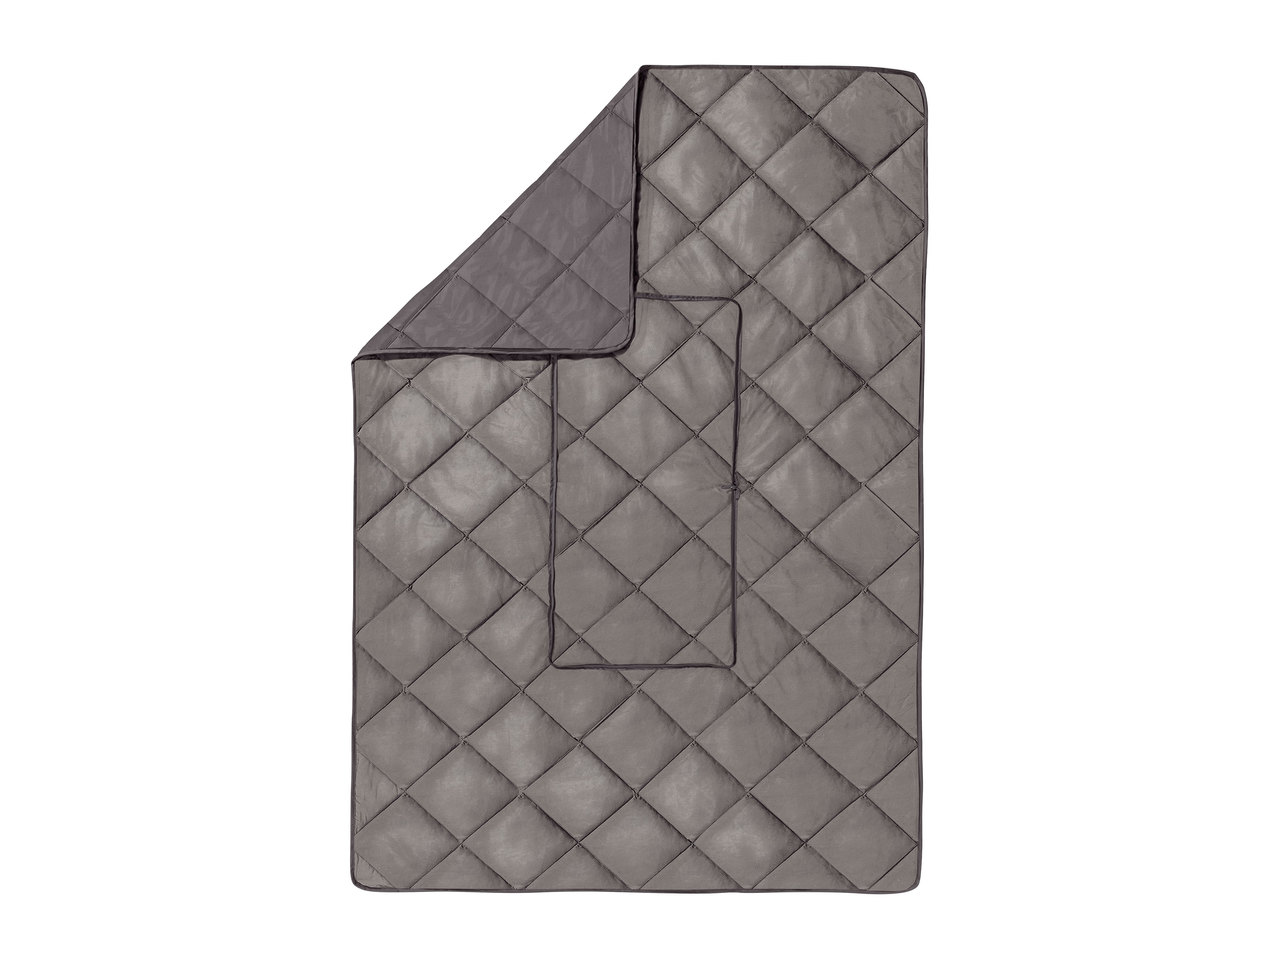 Meradiso 2-in-1 Cushion and Blanket1